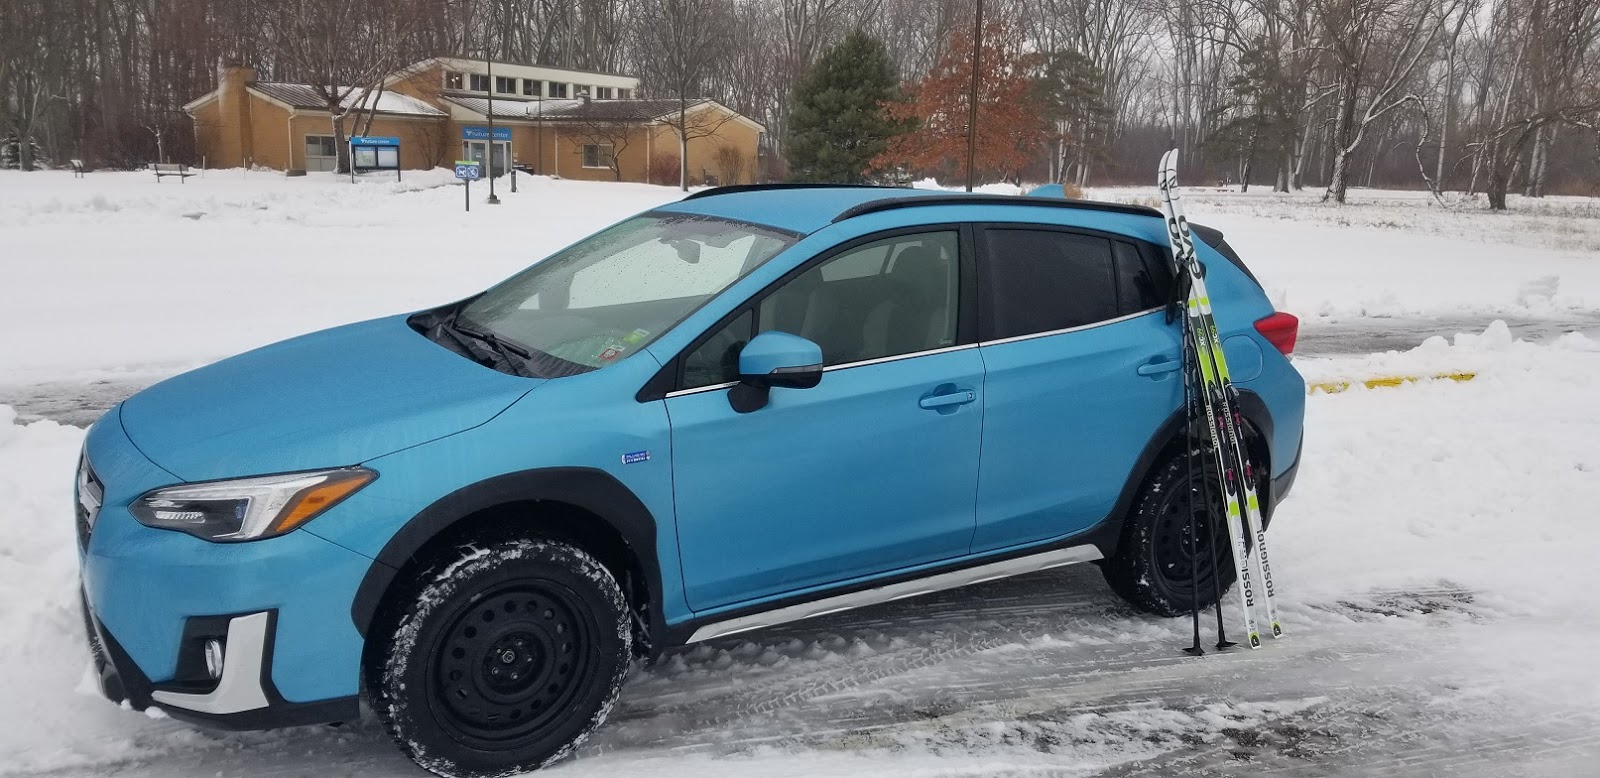 Subaru Crosstrek Hybrid Blog: Winter and the Crosstrek Hybrid